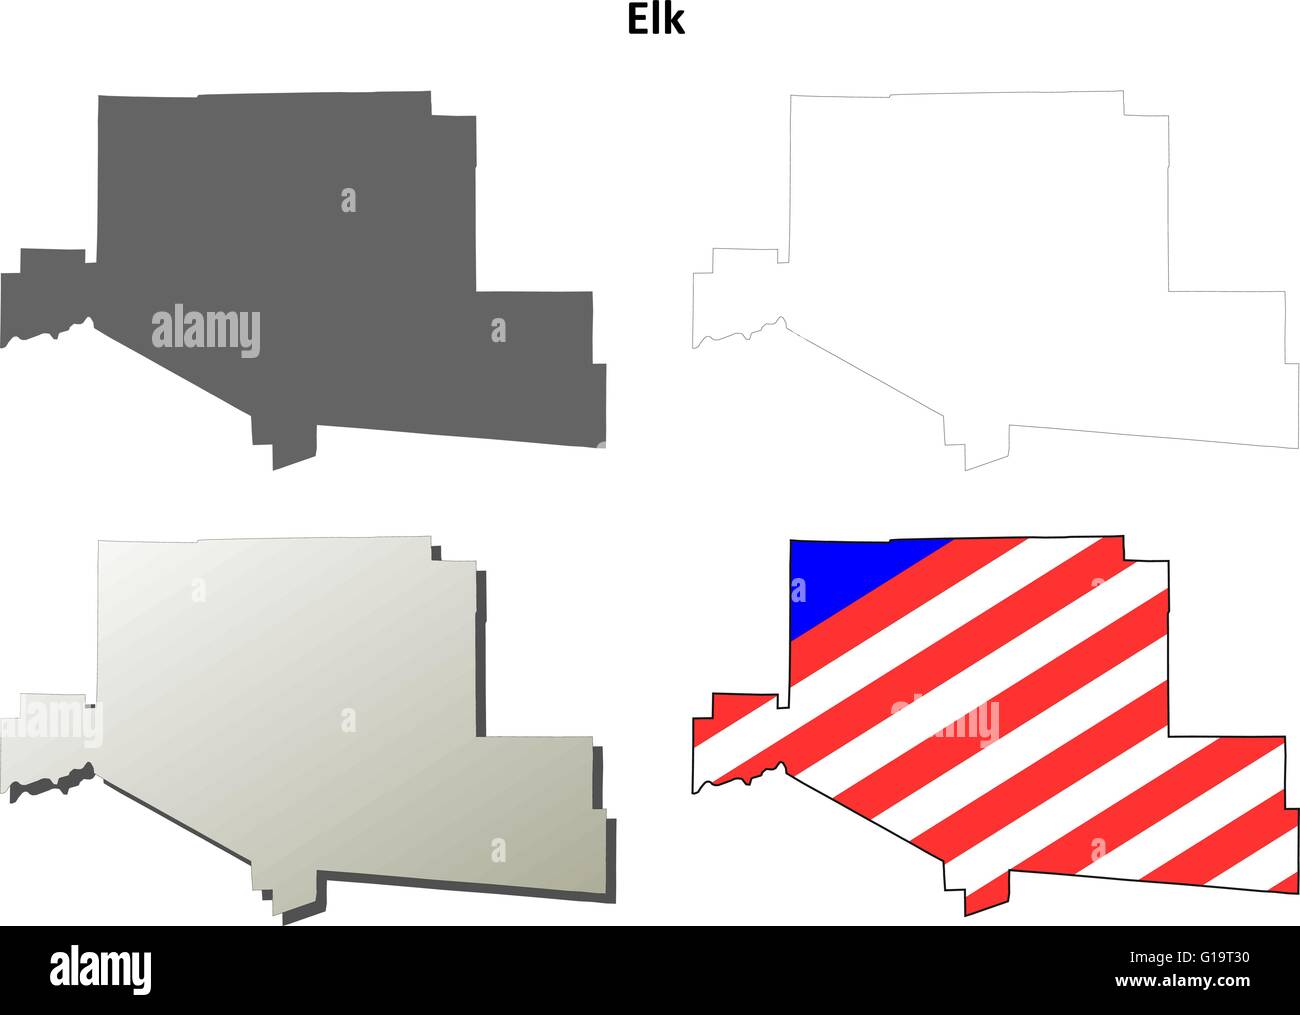 Elk County, Pennsylvania outline map set Stock Vector